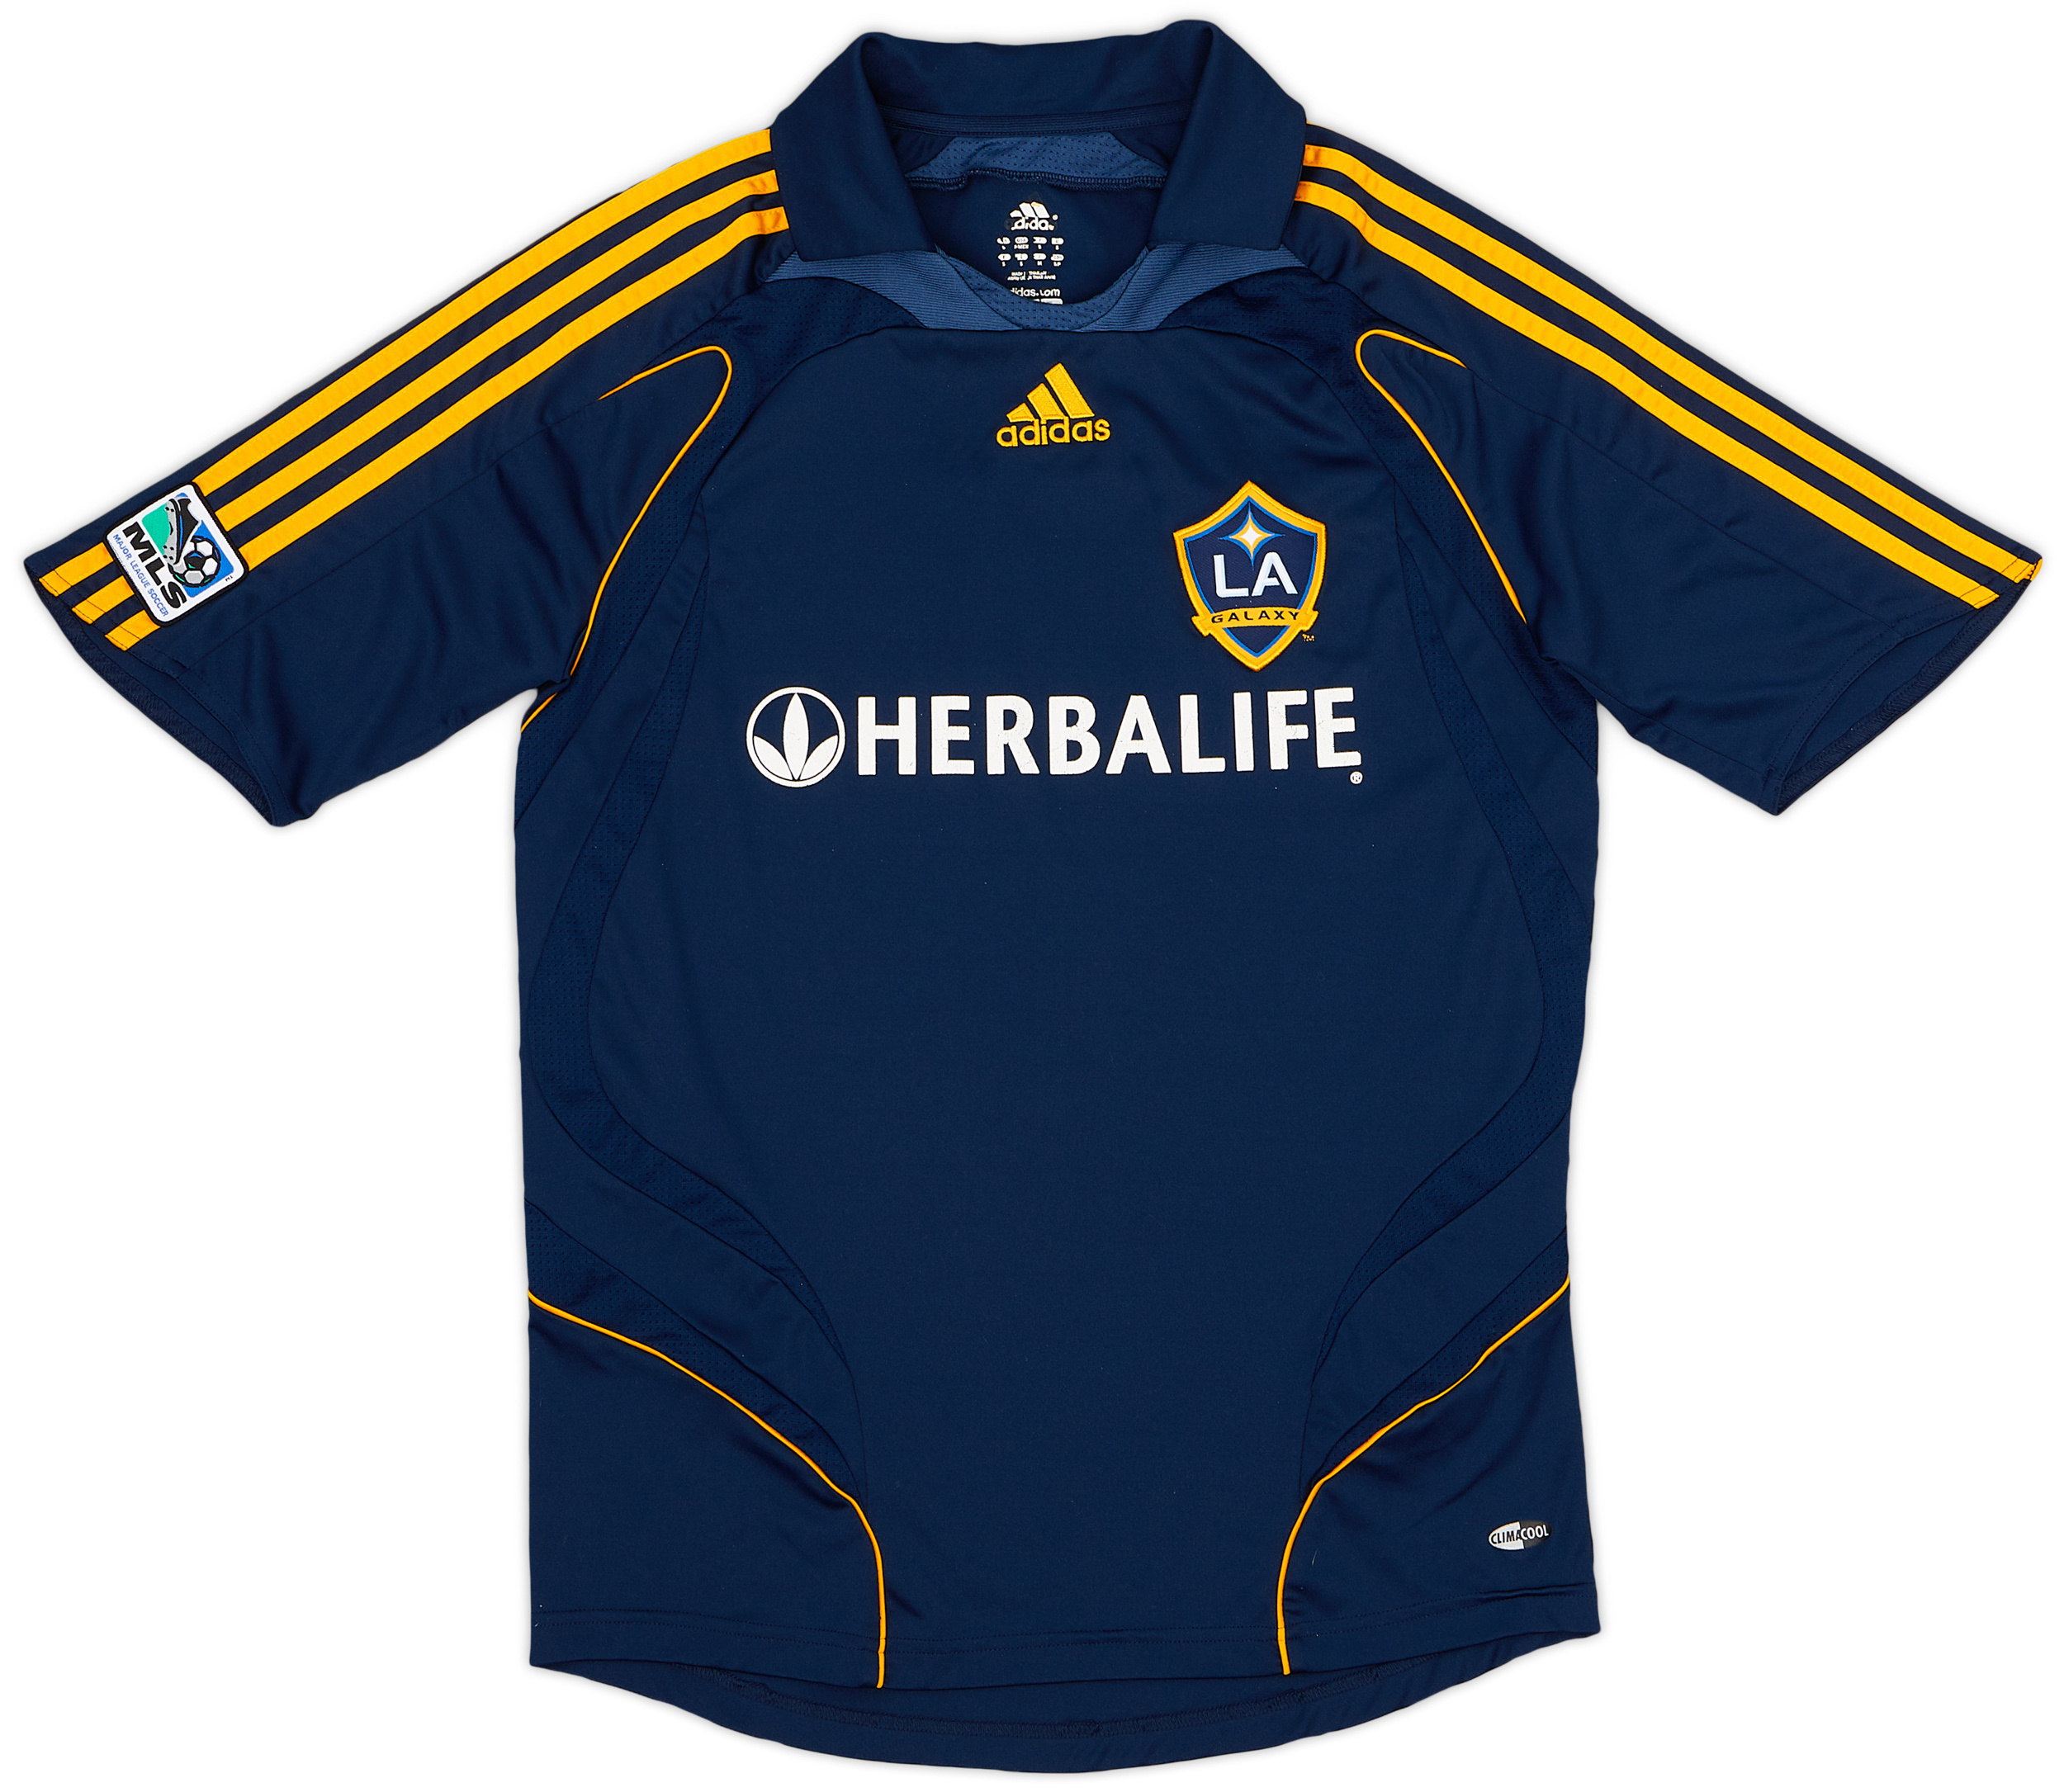 Los Angeles Galaxy  Uit  shirt  (Original)